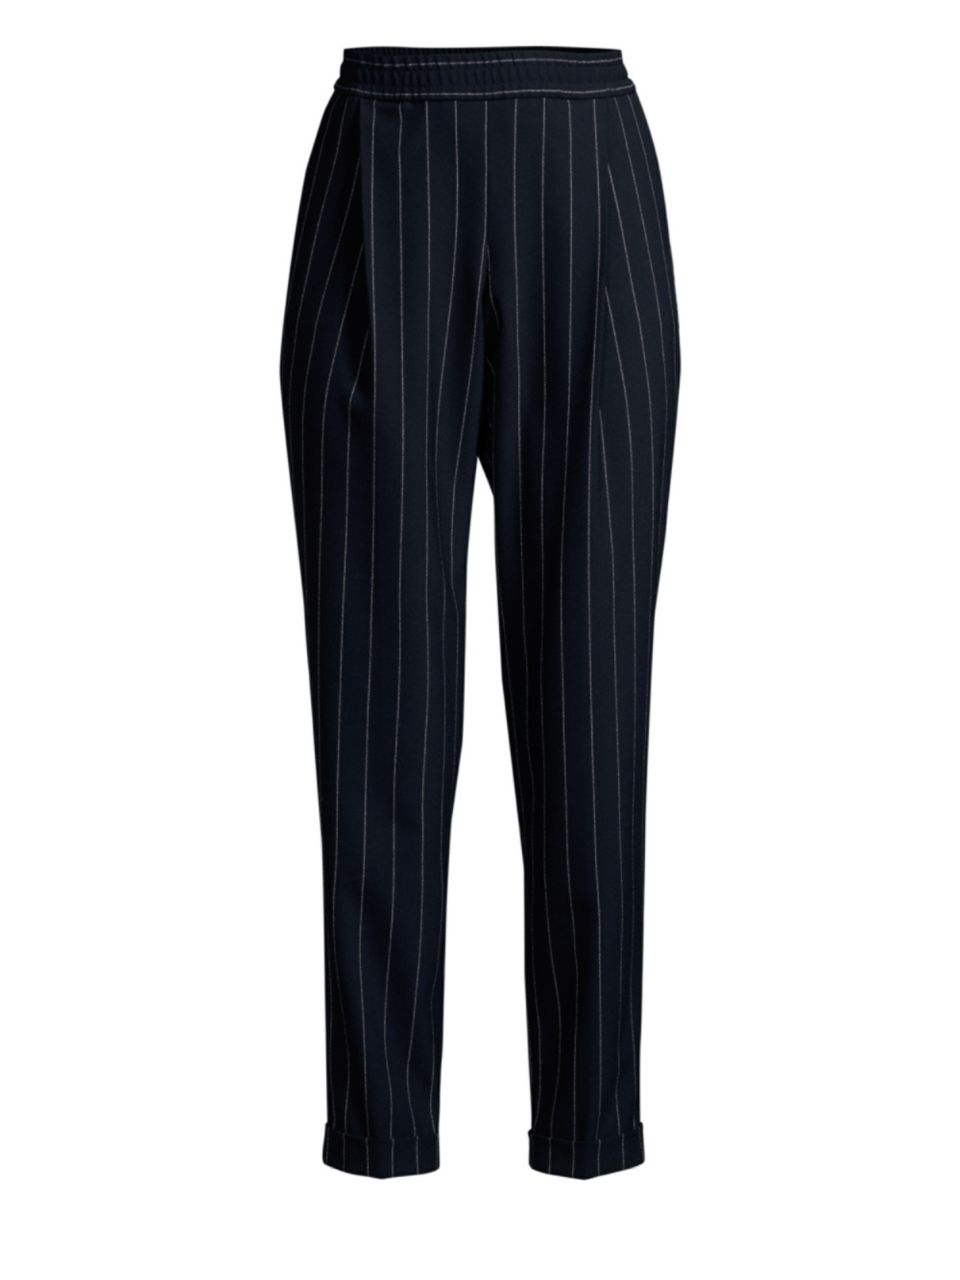 Hugo Boss Ariysa Pinstripe Cropped Trousers